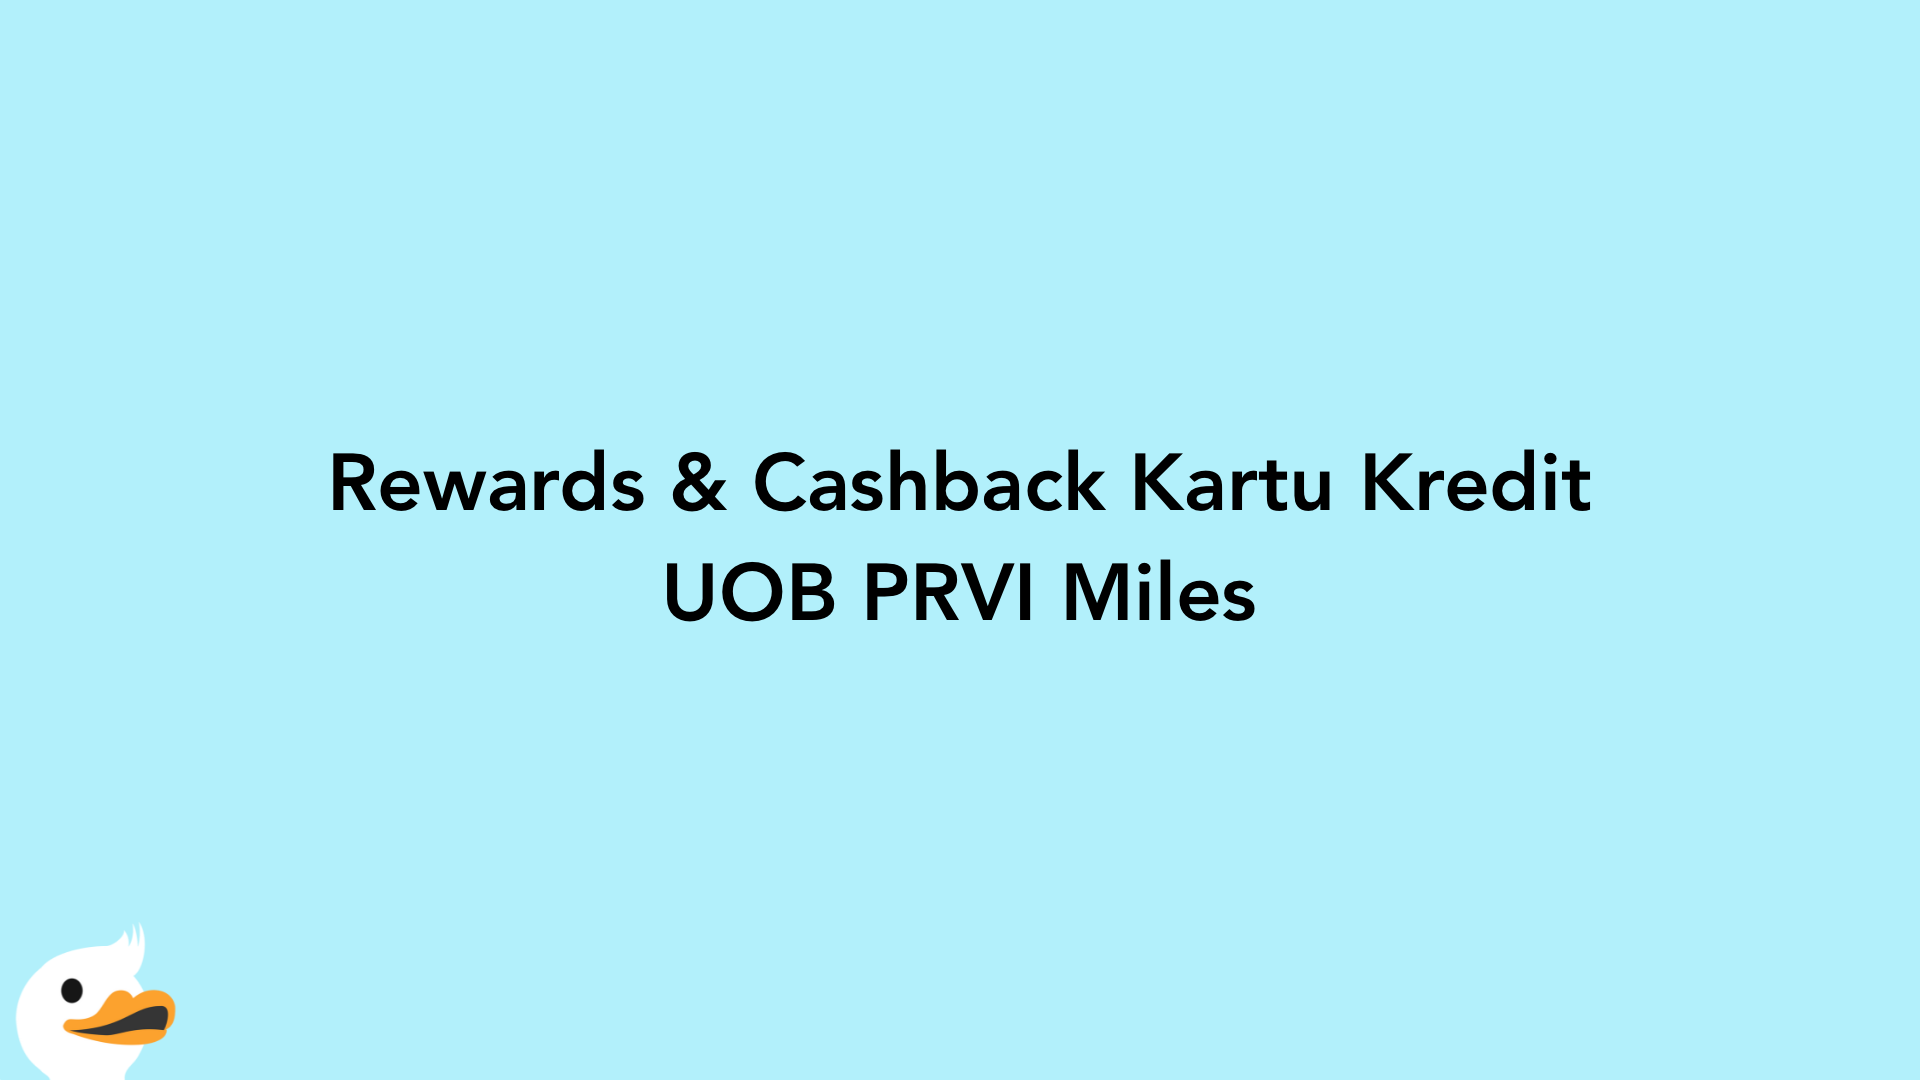 Rewards & Cashback Kartu Kredit UOB PRVI Miles